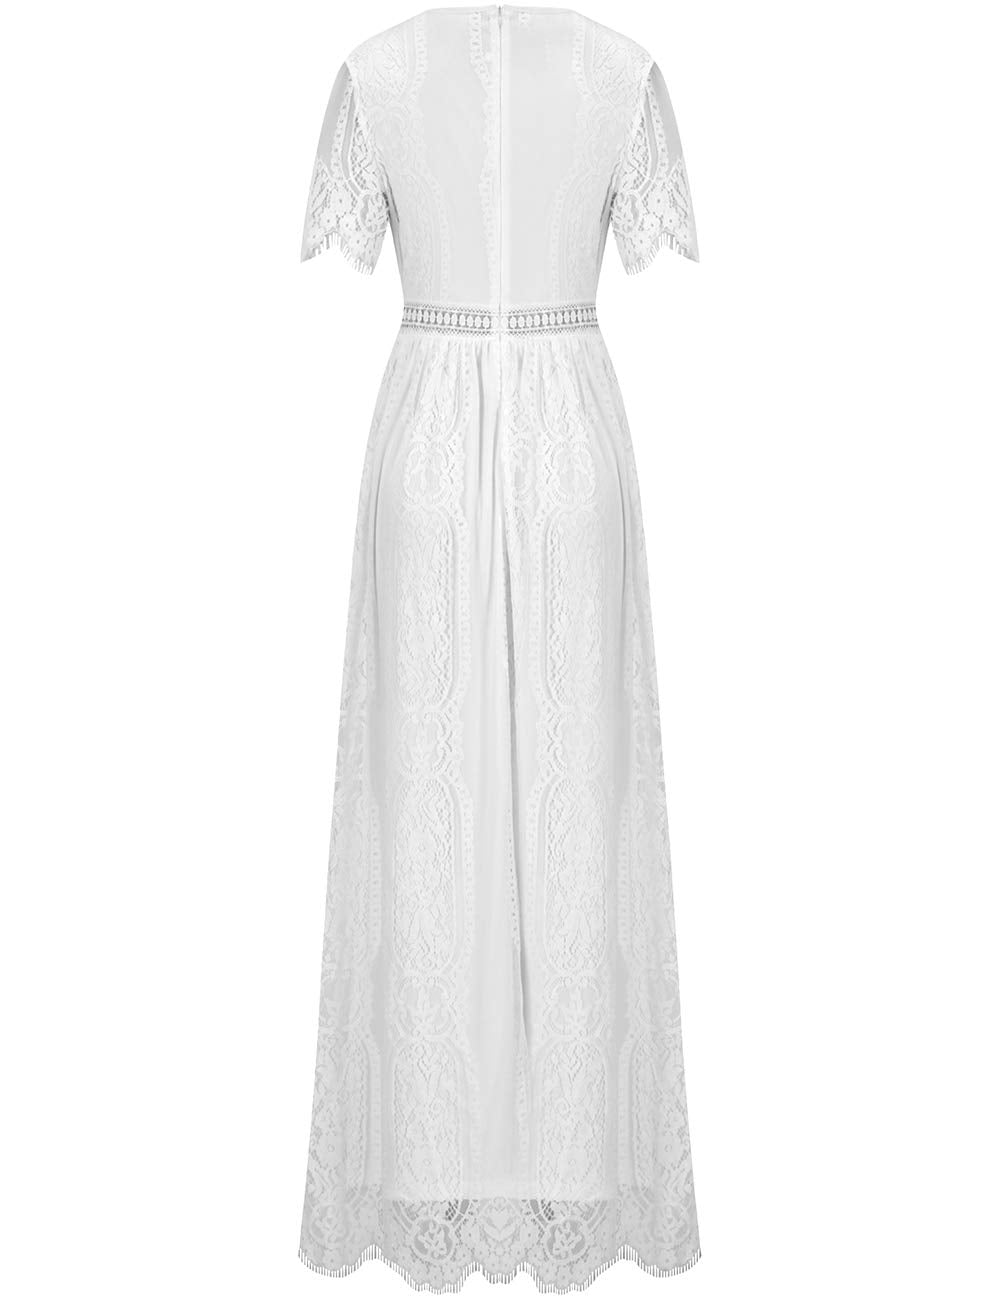 Deep V Neck Short Sleeve Floral Lace Bridesmaid Maxi Dress G4865